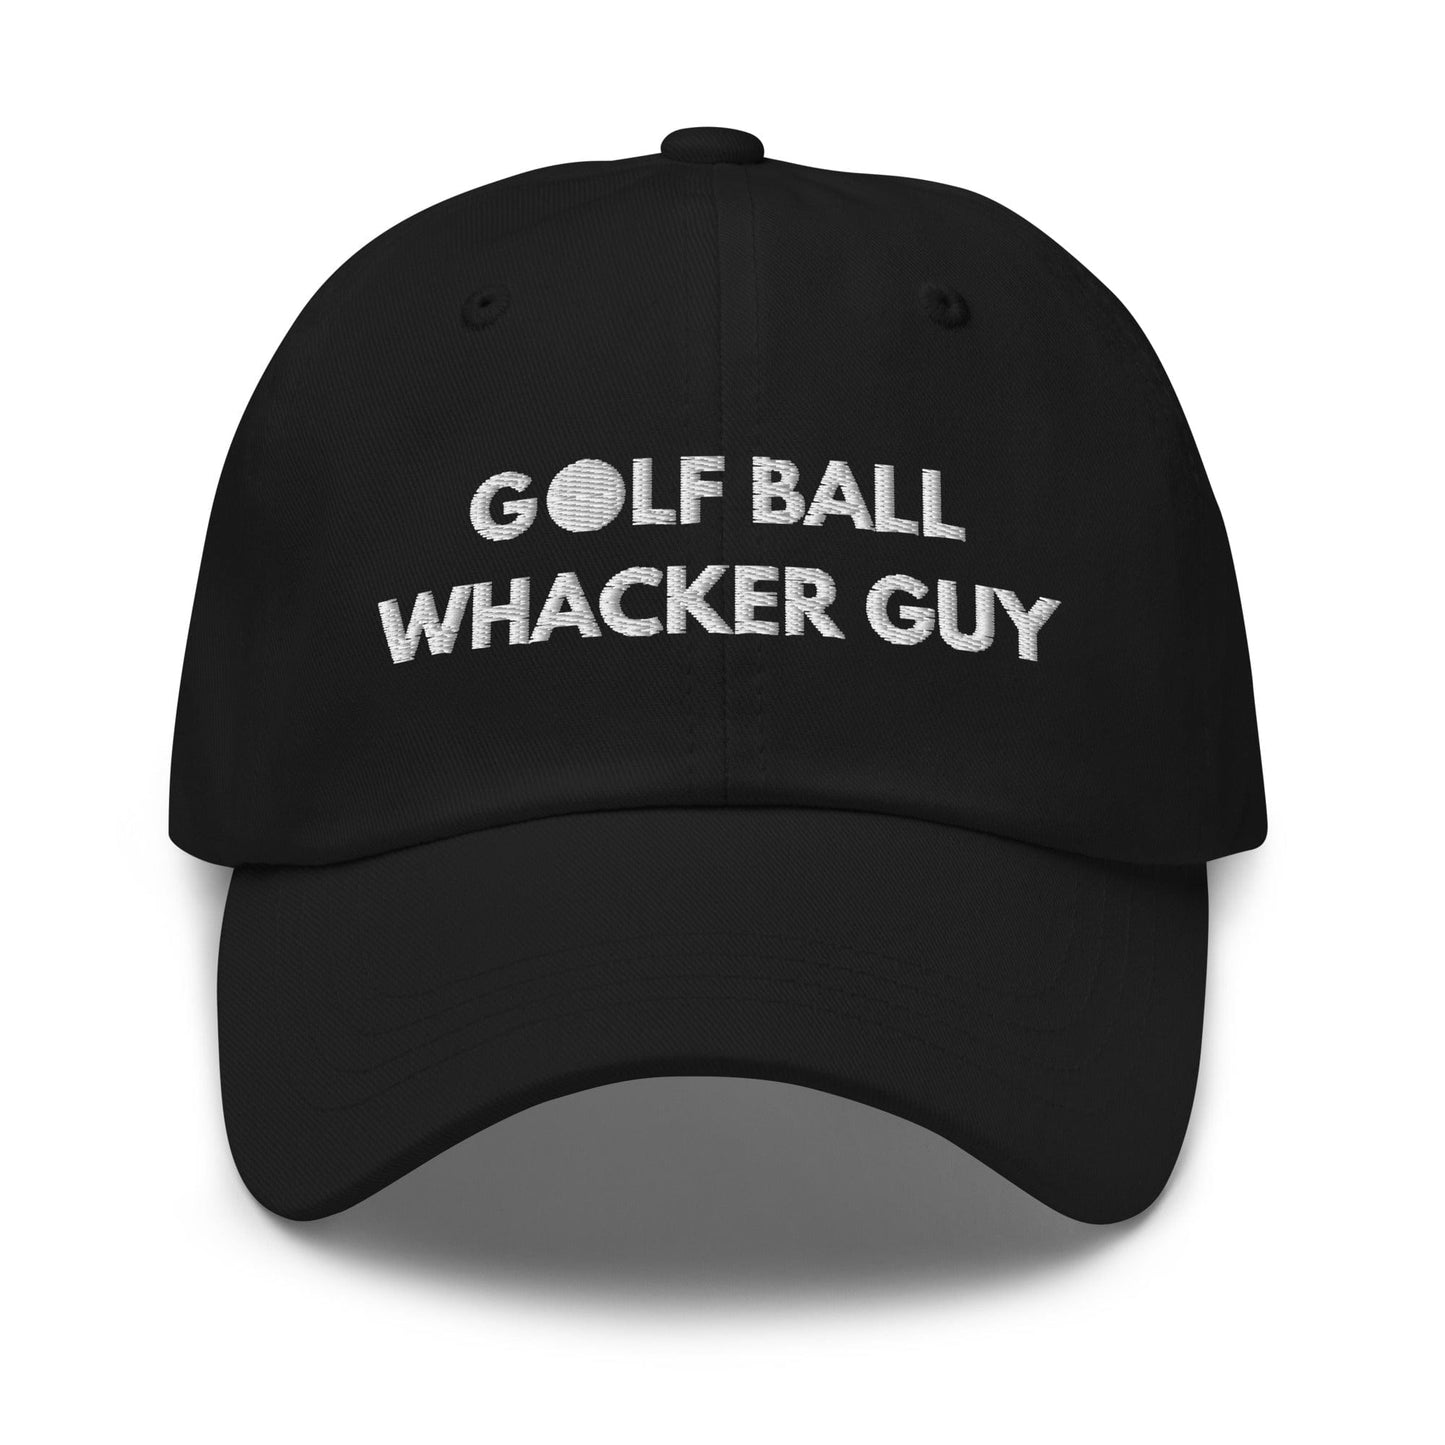 Funny Golfer Gifts  Dad Cap Black Golf Ball Whacker Guy Hat Cap